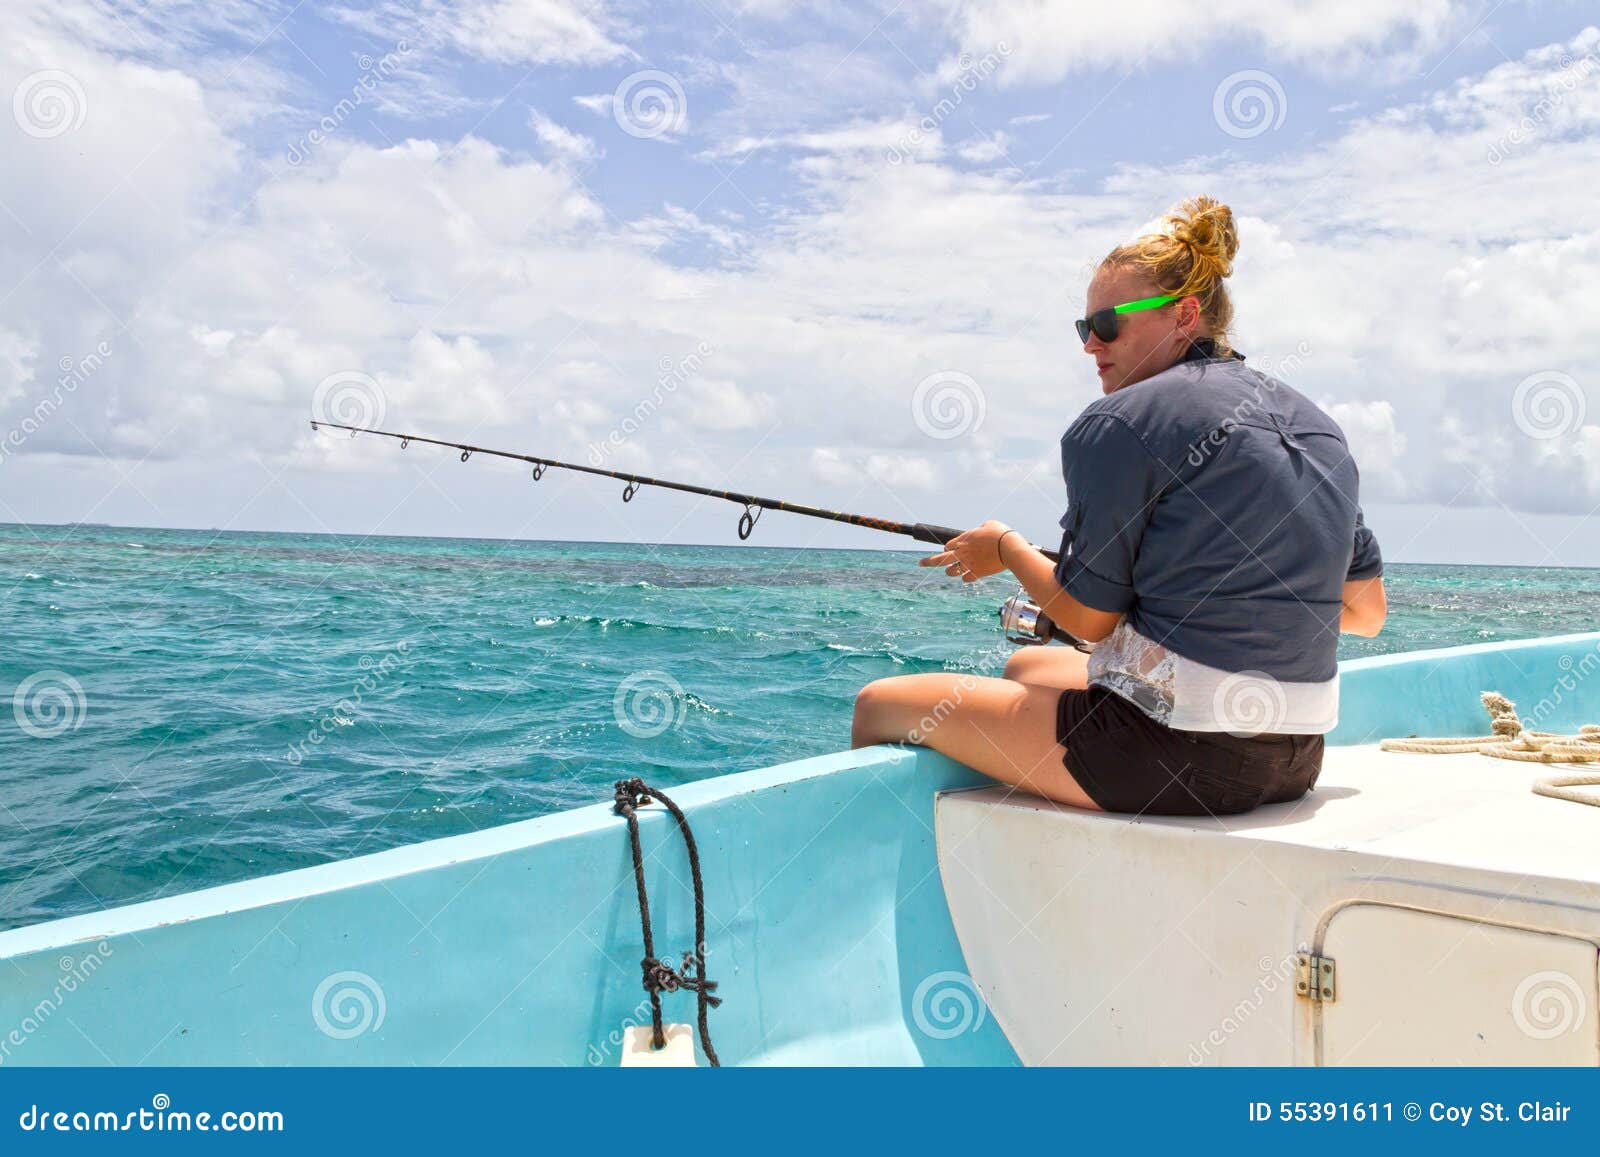 Woman Deep Sea Fishing Stock Photo - Image: 55391611